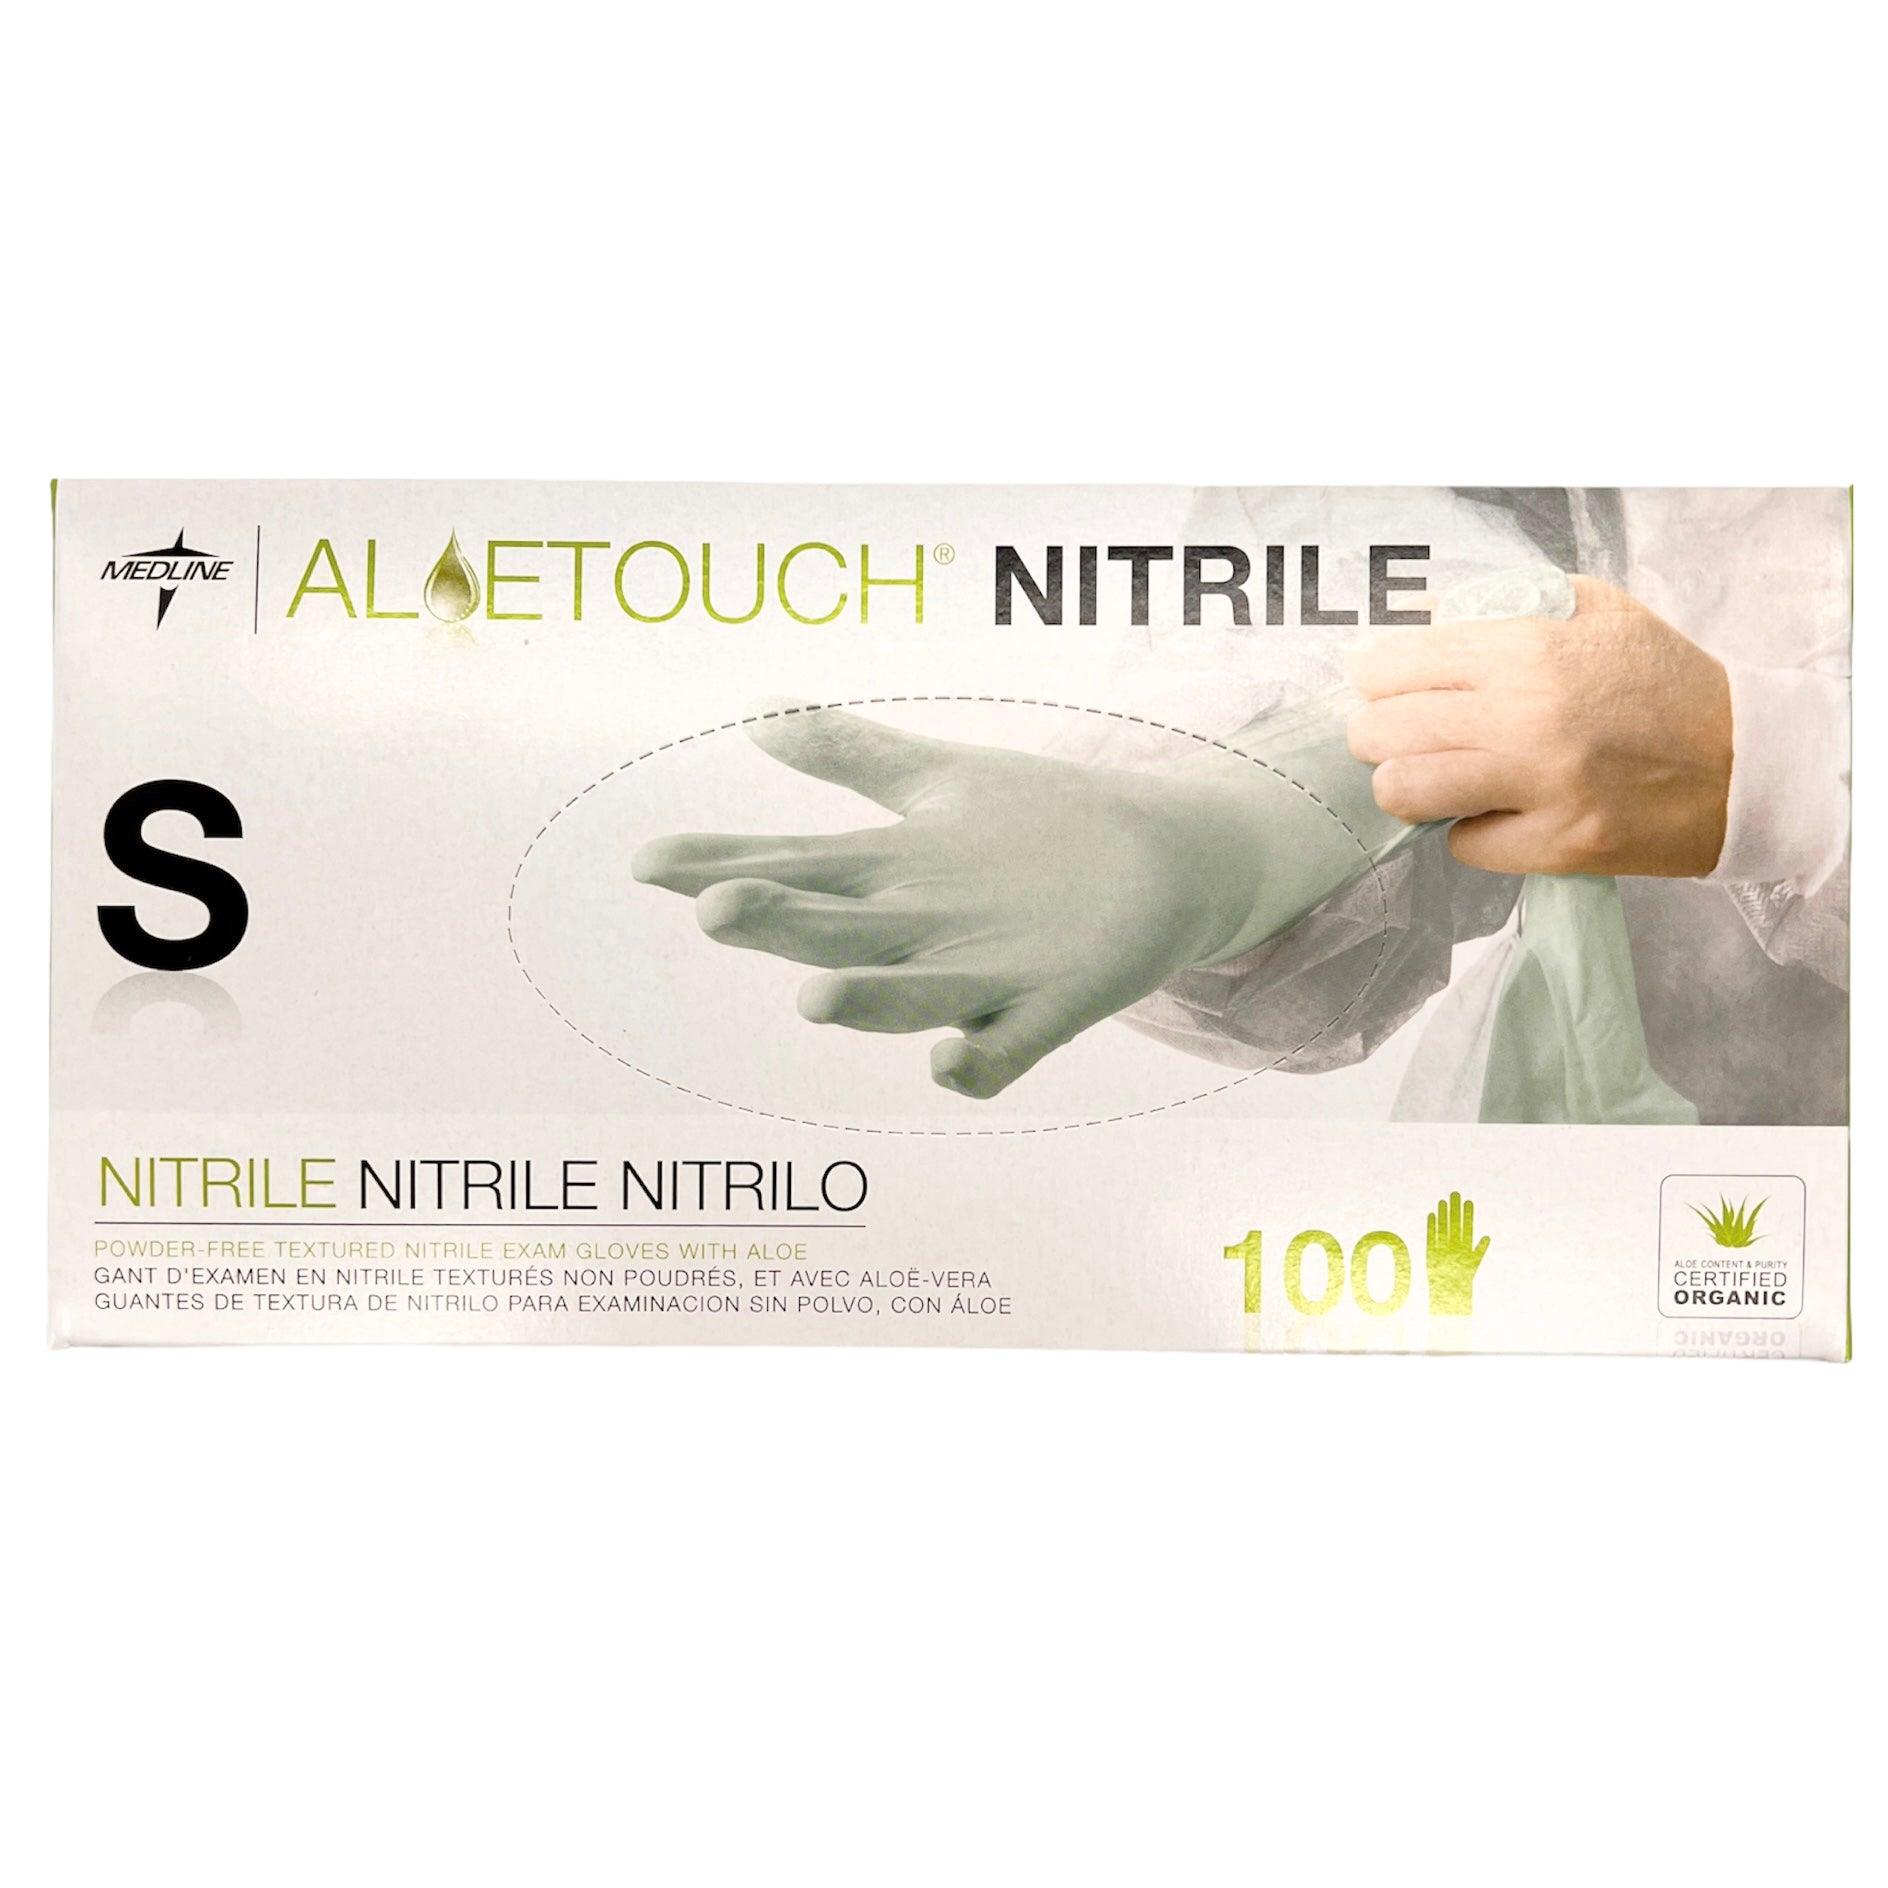 Medline Aloetouch Nitrile Powder-Free Exam Glove Chemo Approved